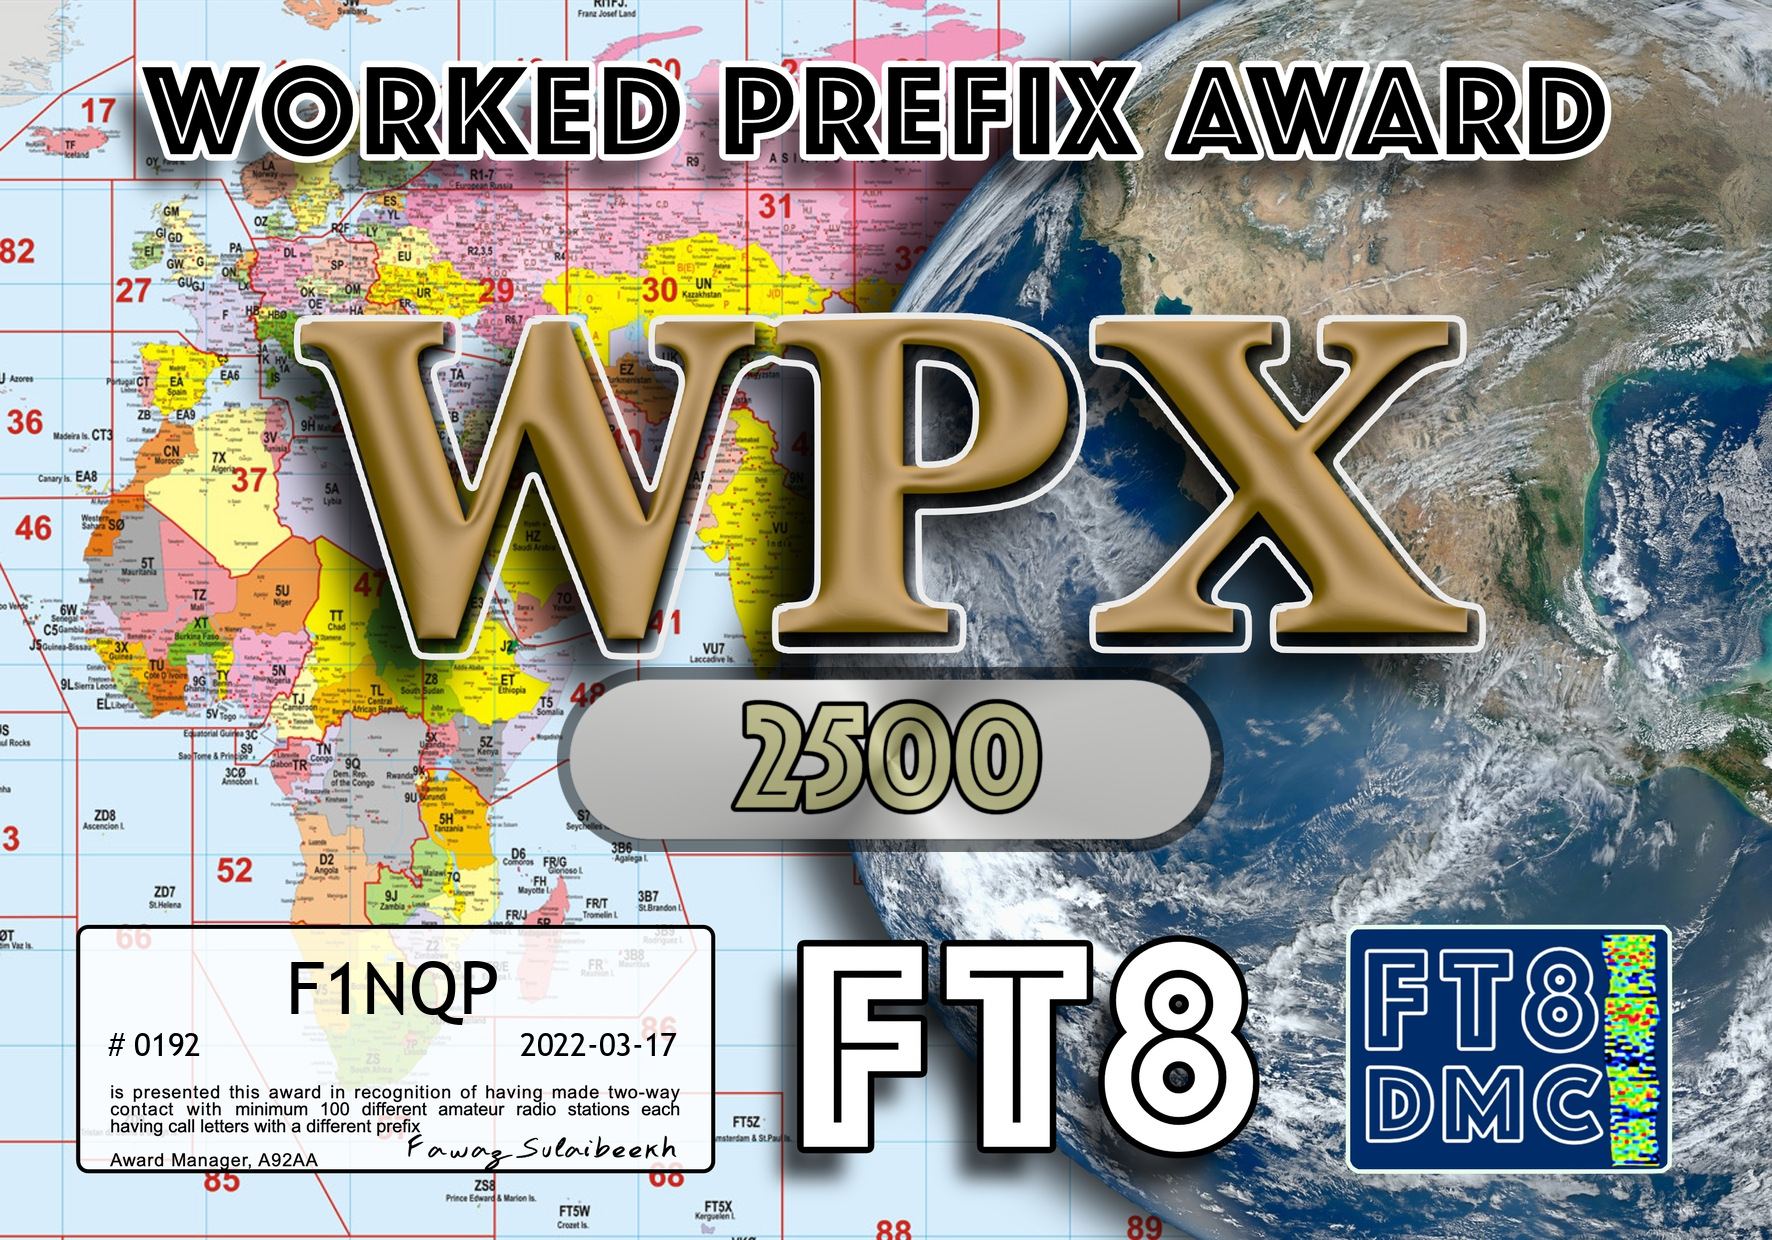 F1NQP-WPX-2500_FT8DMC.jpg